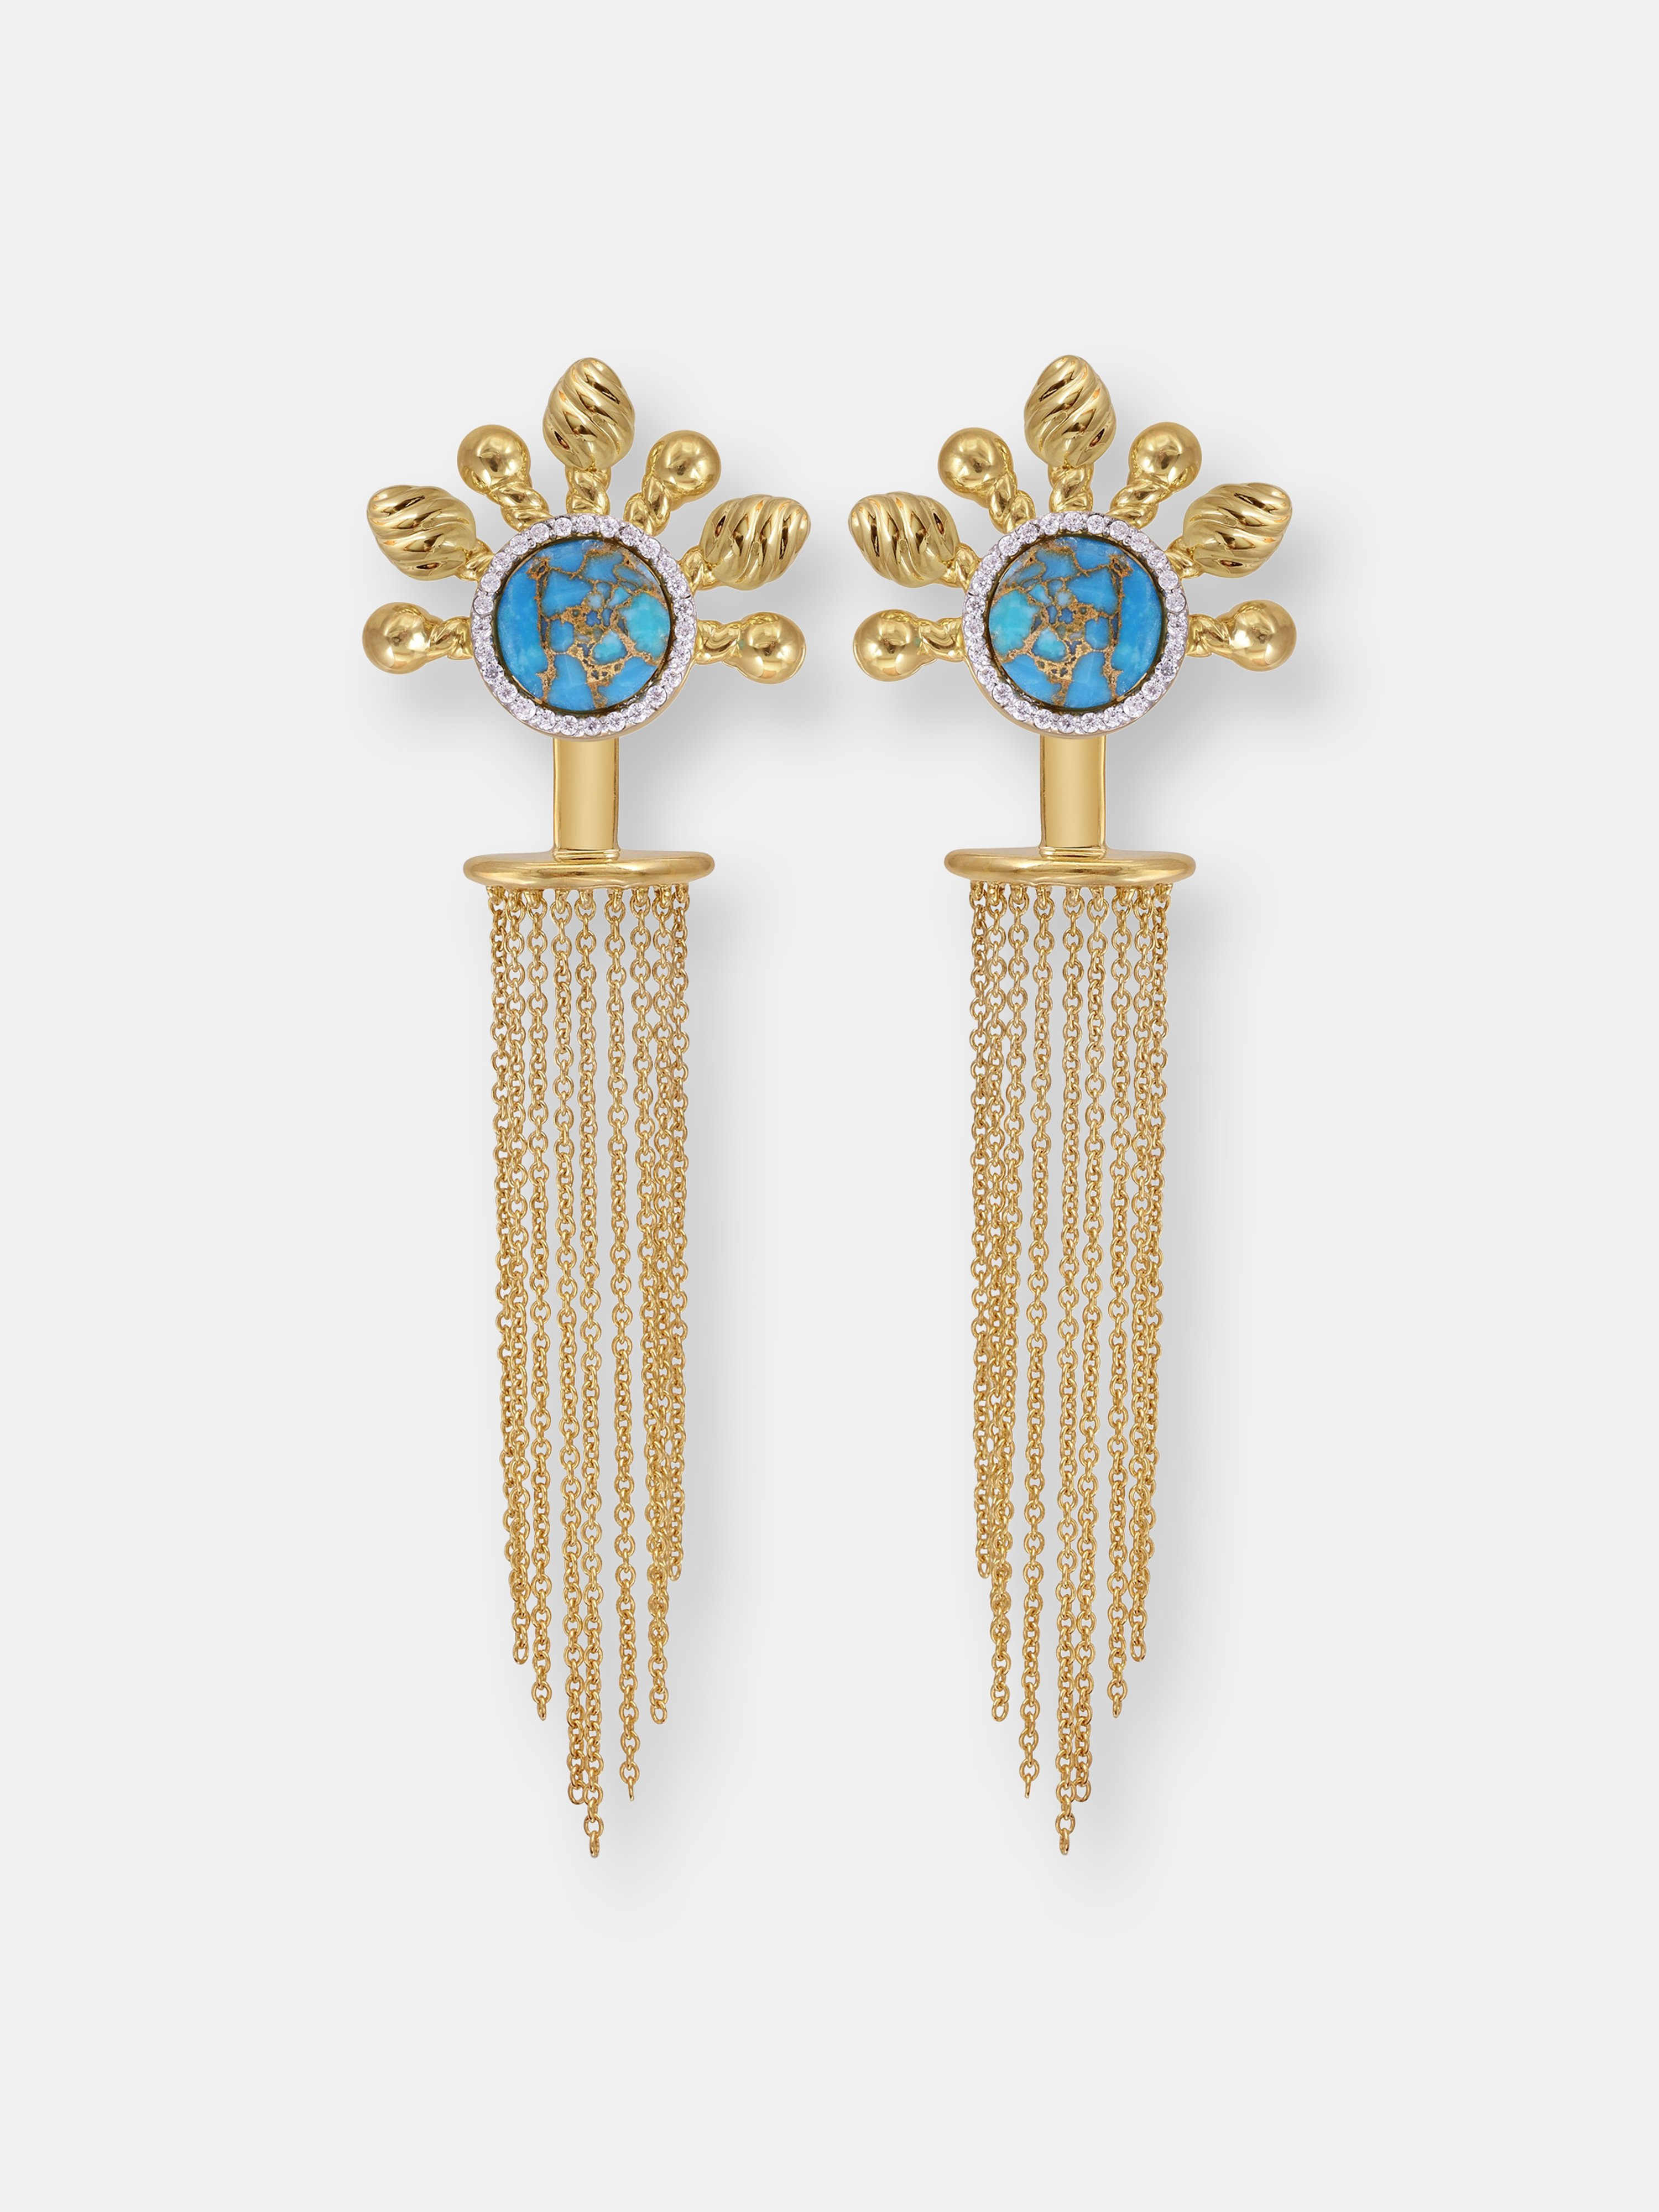 Luvmyjewelry Floating Rays Half Sun Turquoise Detachable Diamond Earrings In 14k Yellow Gold Plated